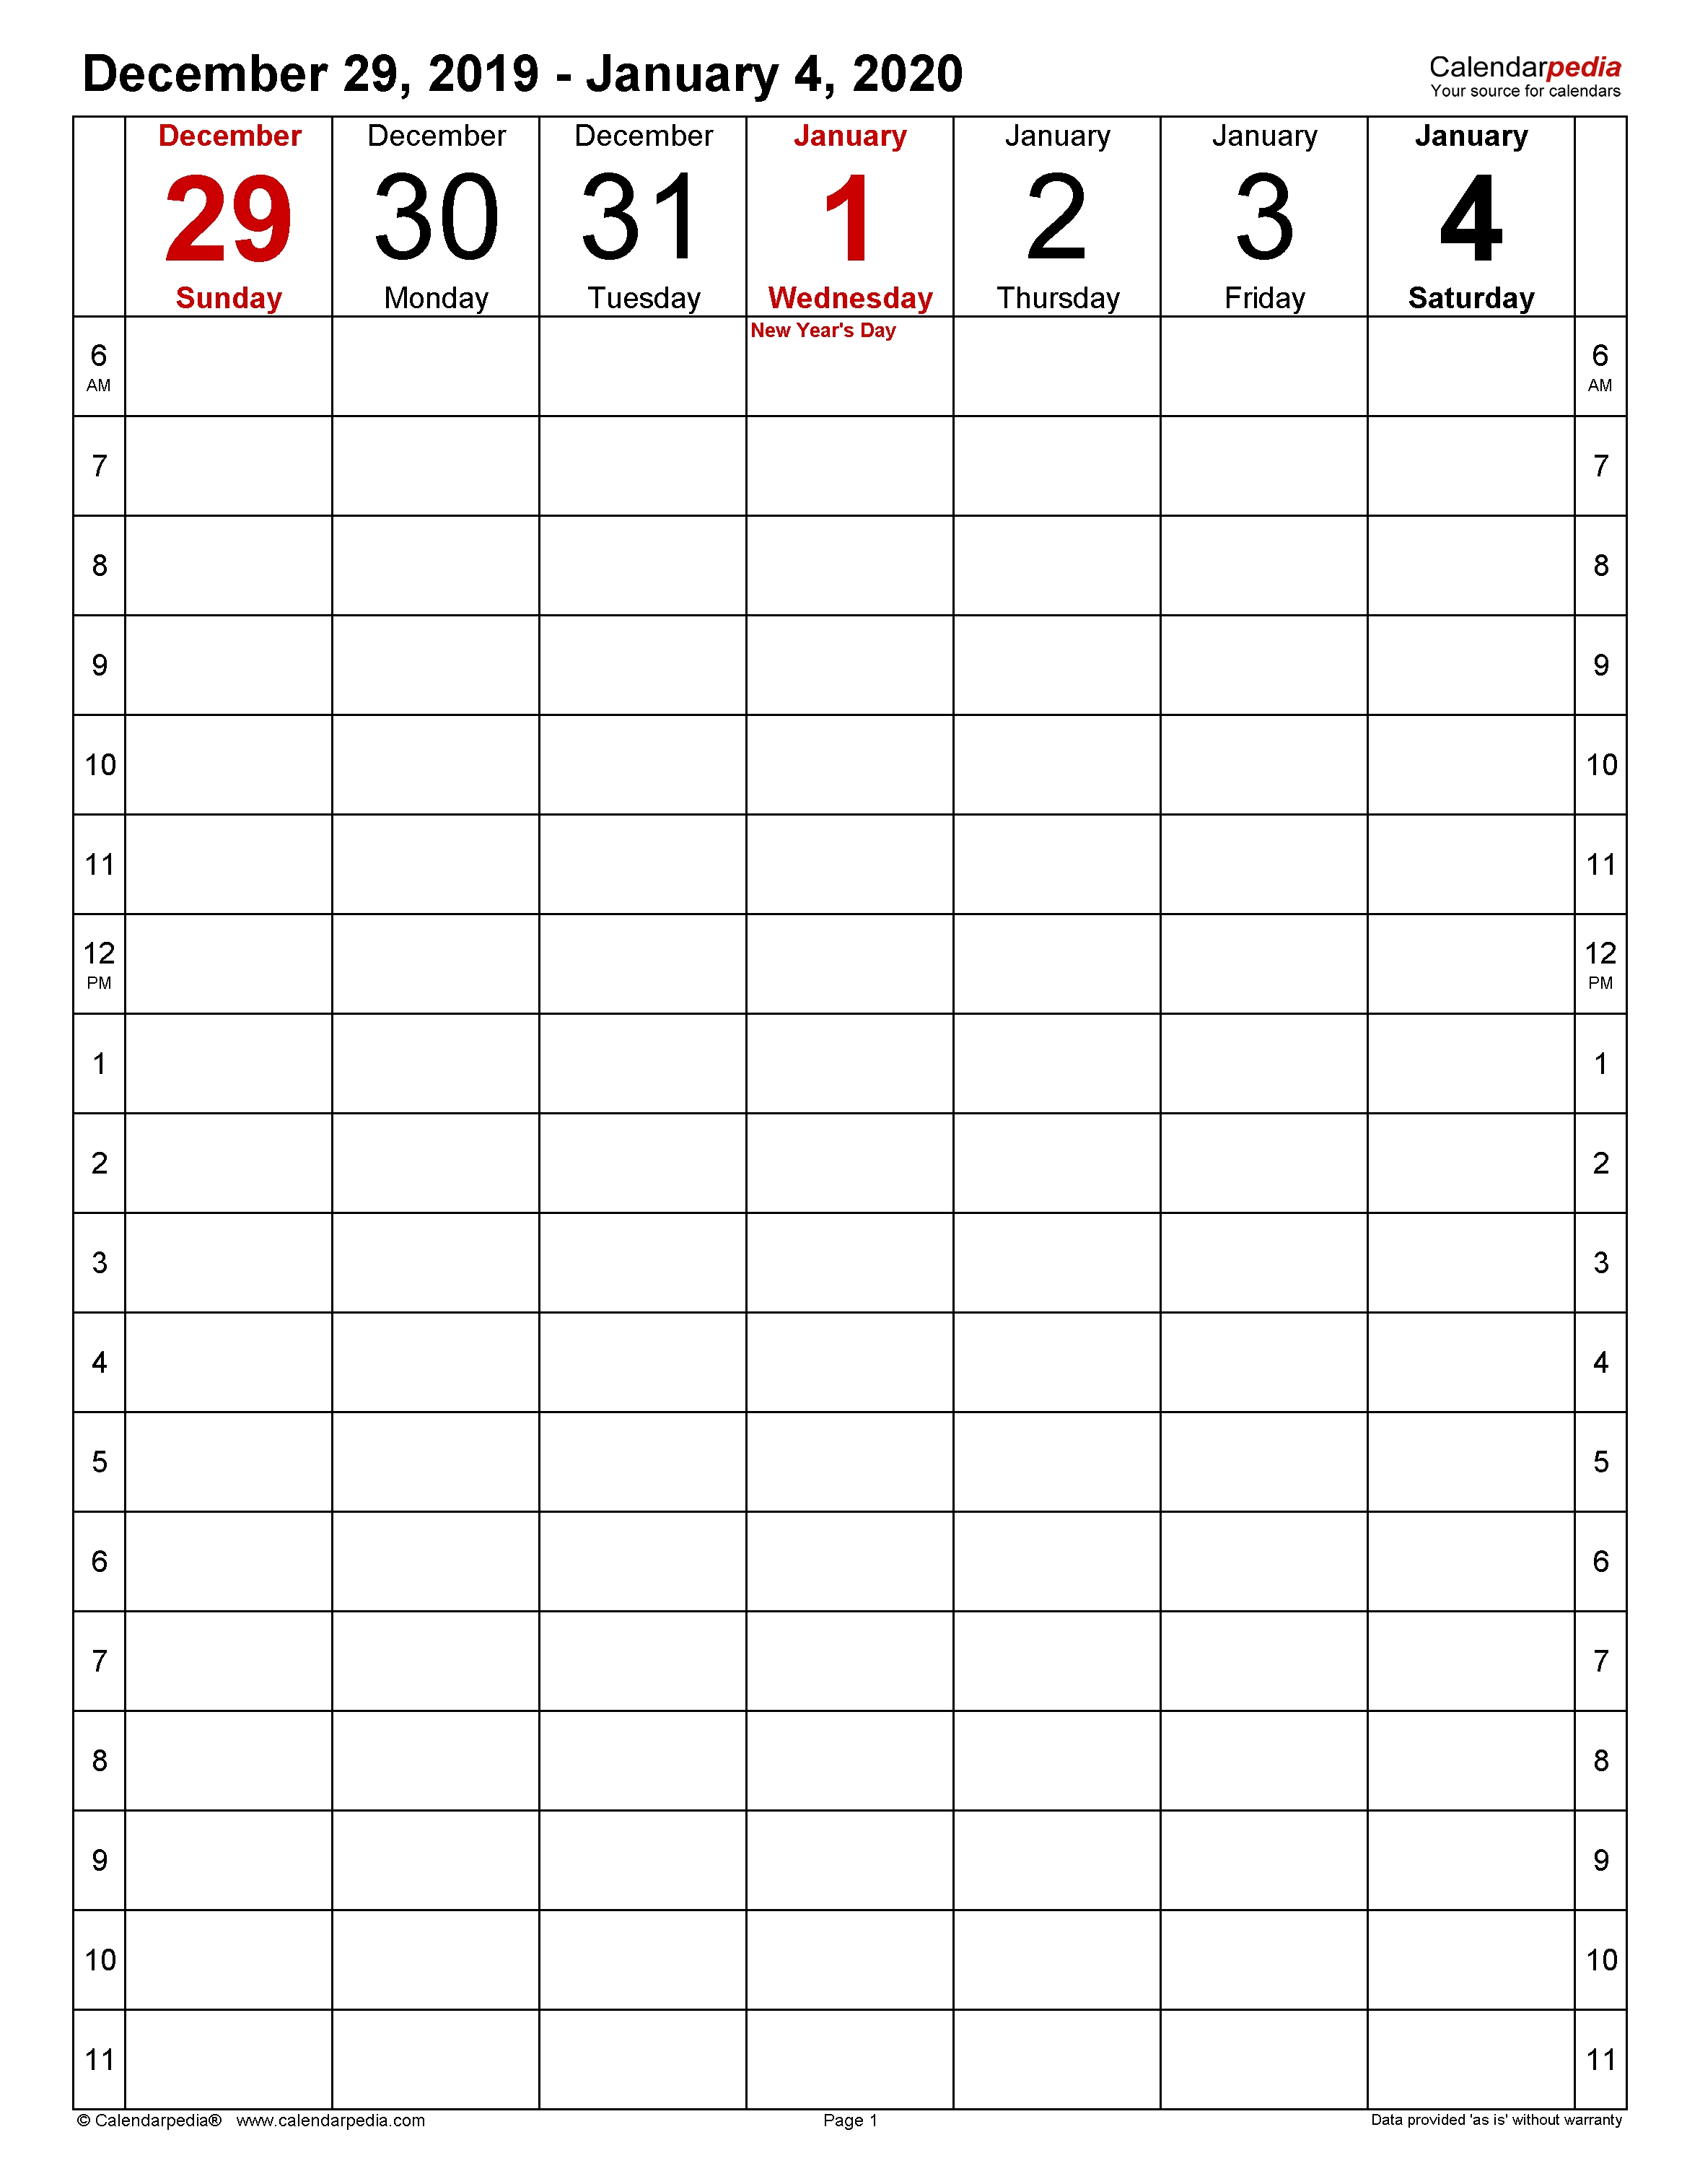 Weekly Calendars 2020 For Word - 12 Free Printable Templates Weekly Calendar Template 30 Minute Increments